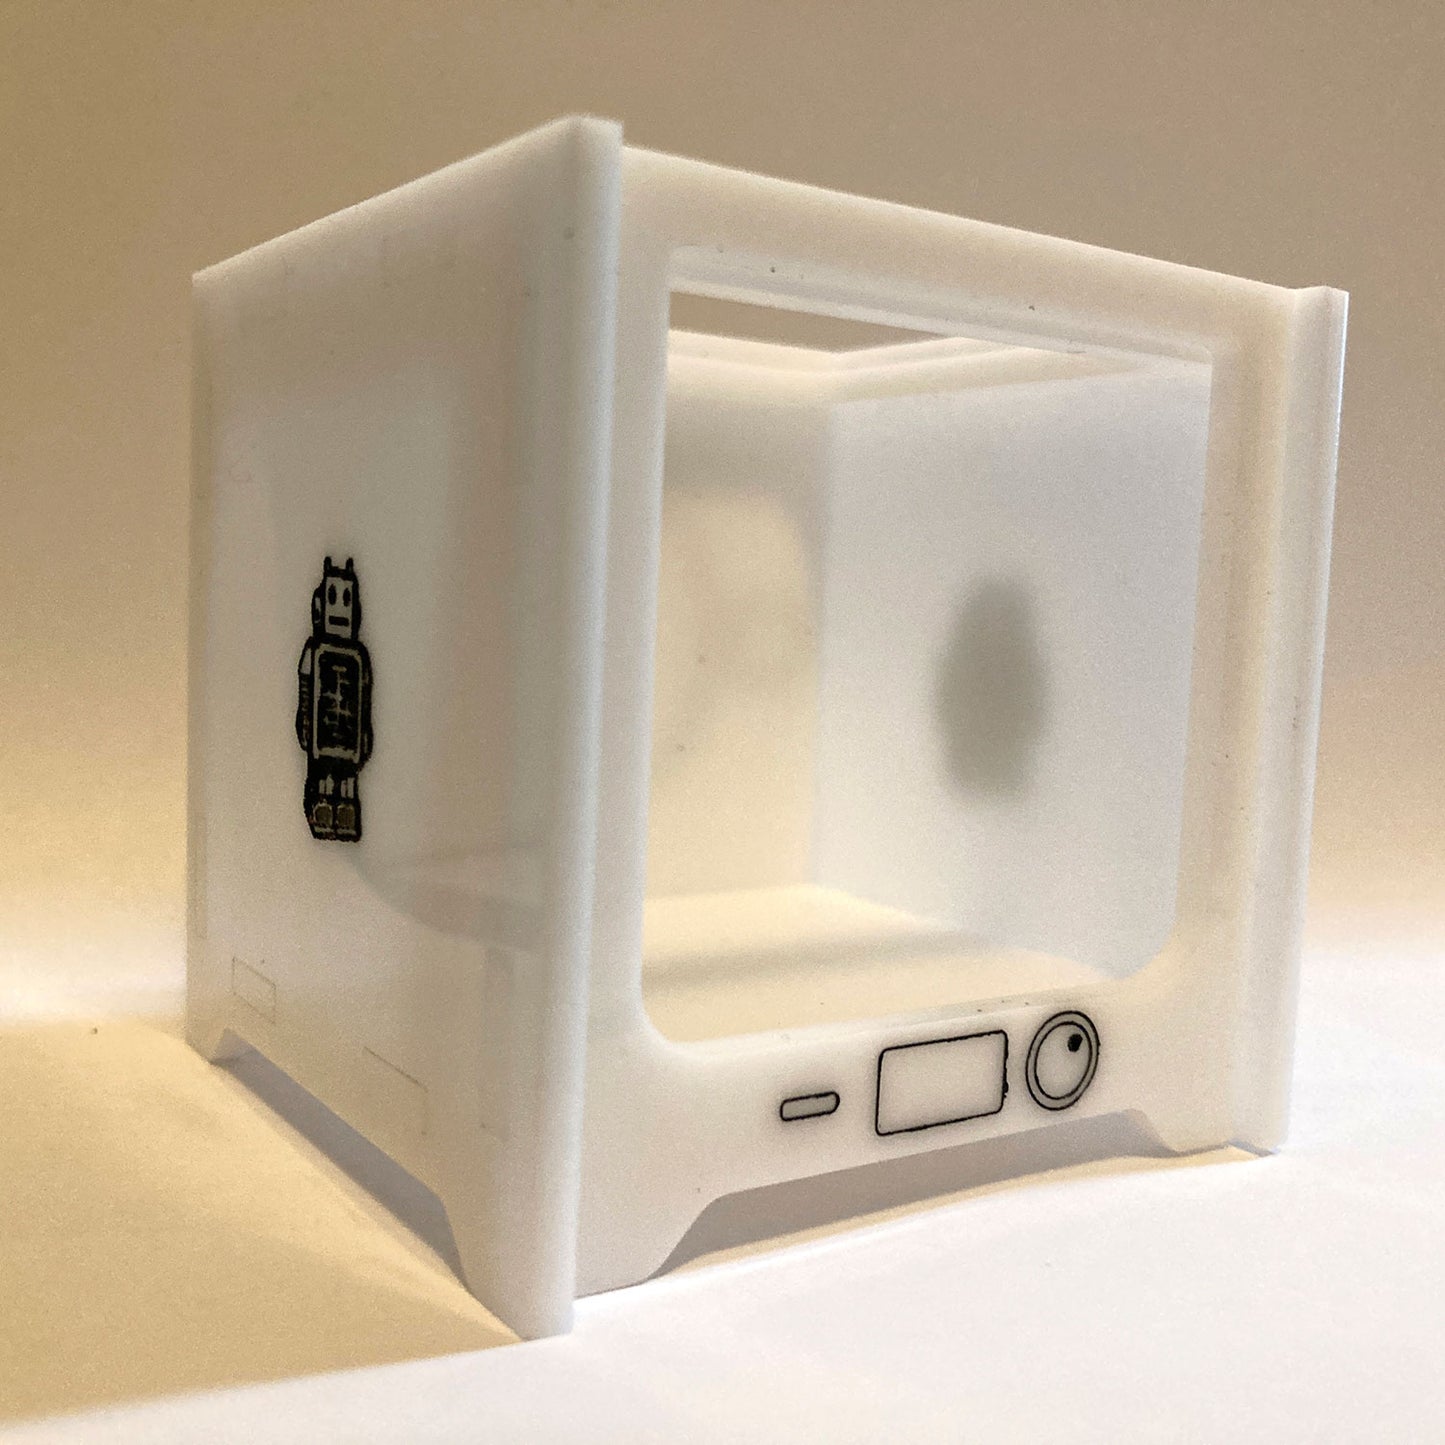 Tiny Snap-fit Ultimaker 3 "3D Printer"